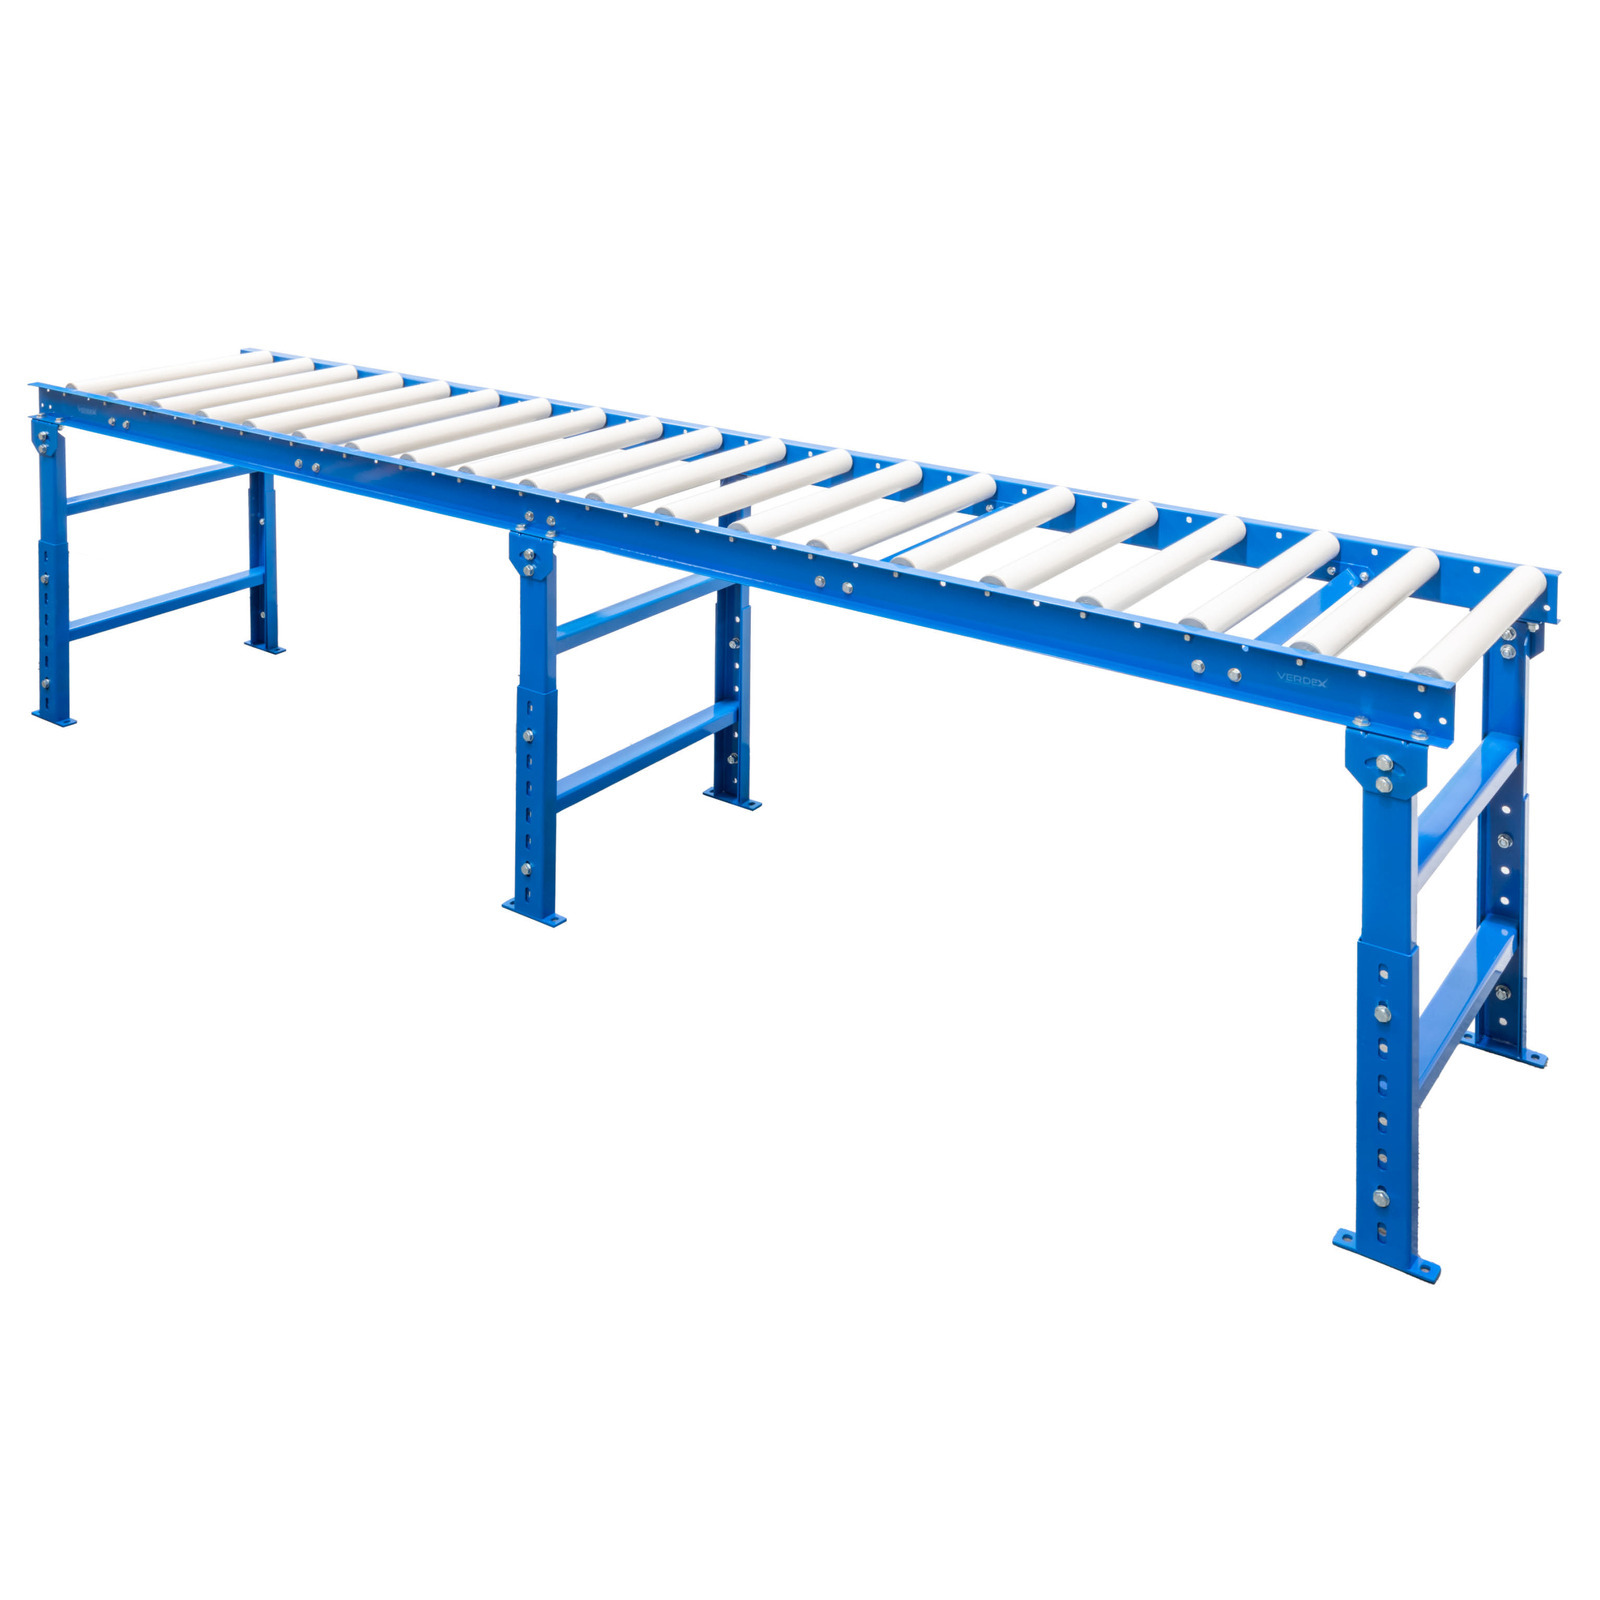 Poly Roller Conveyor Kit 3 metres long x 600mm wide